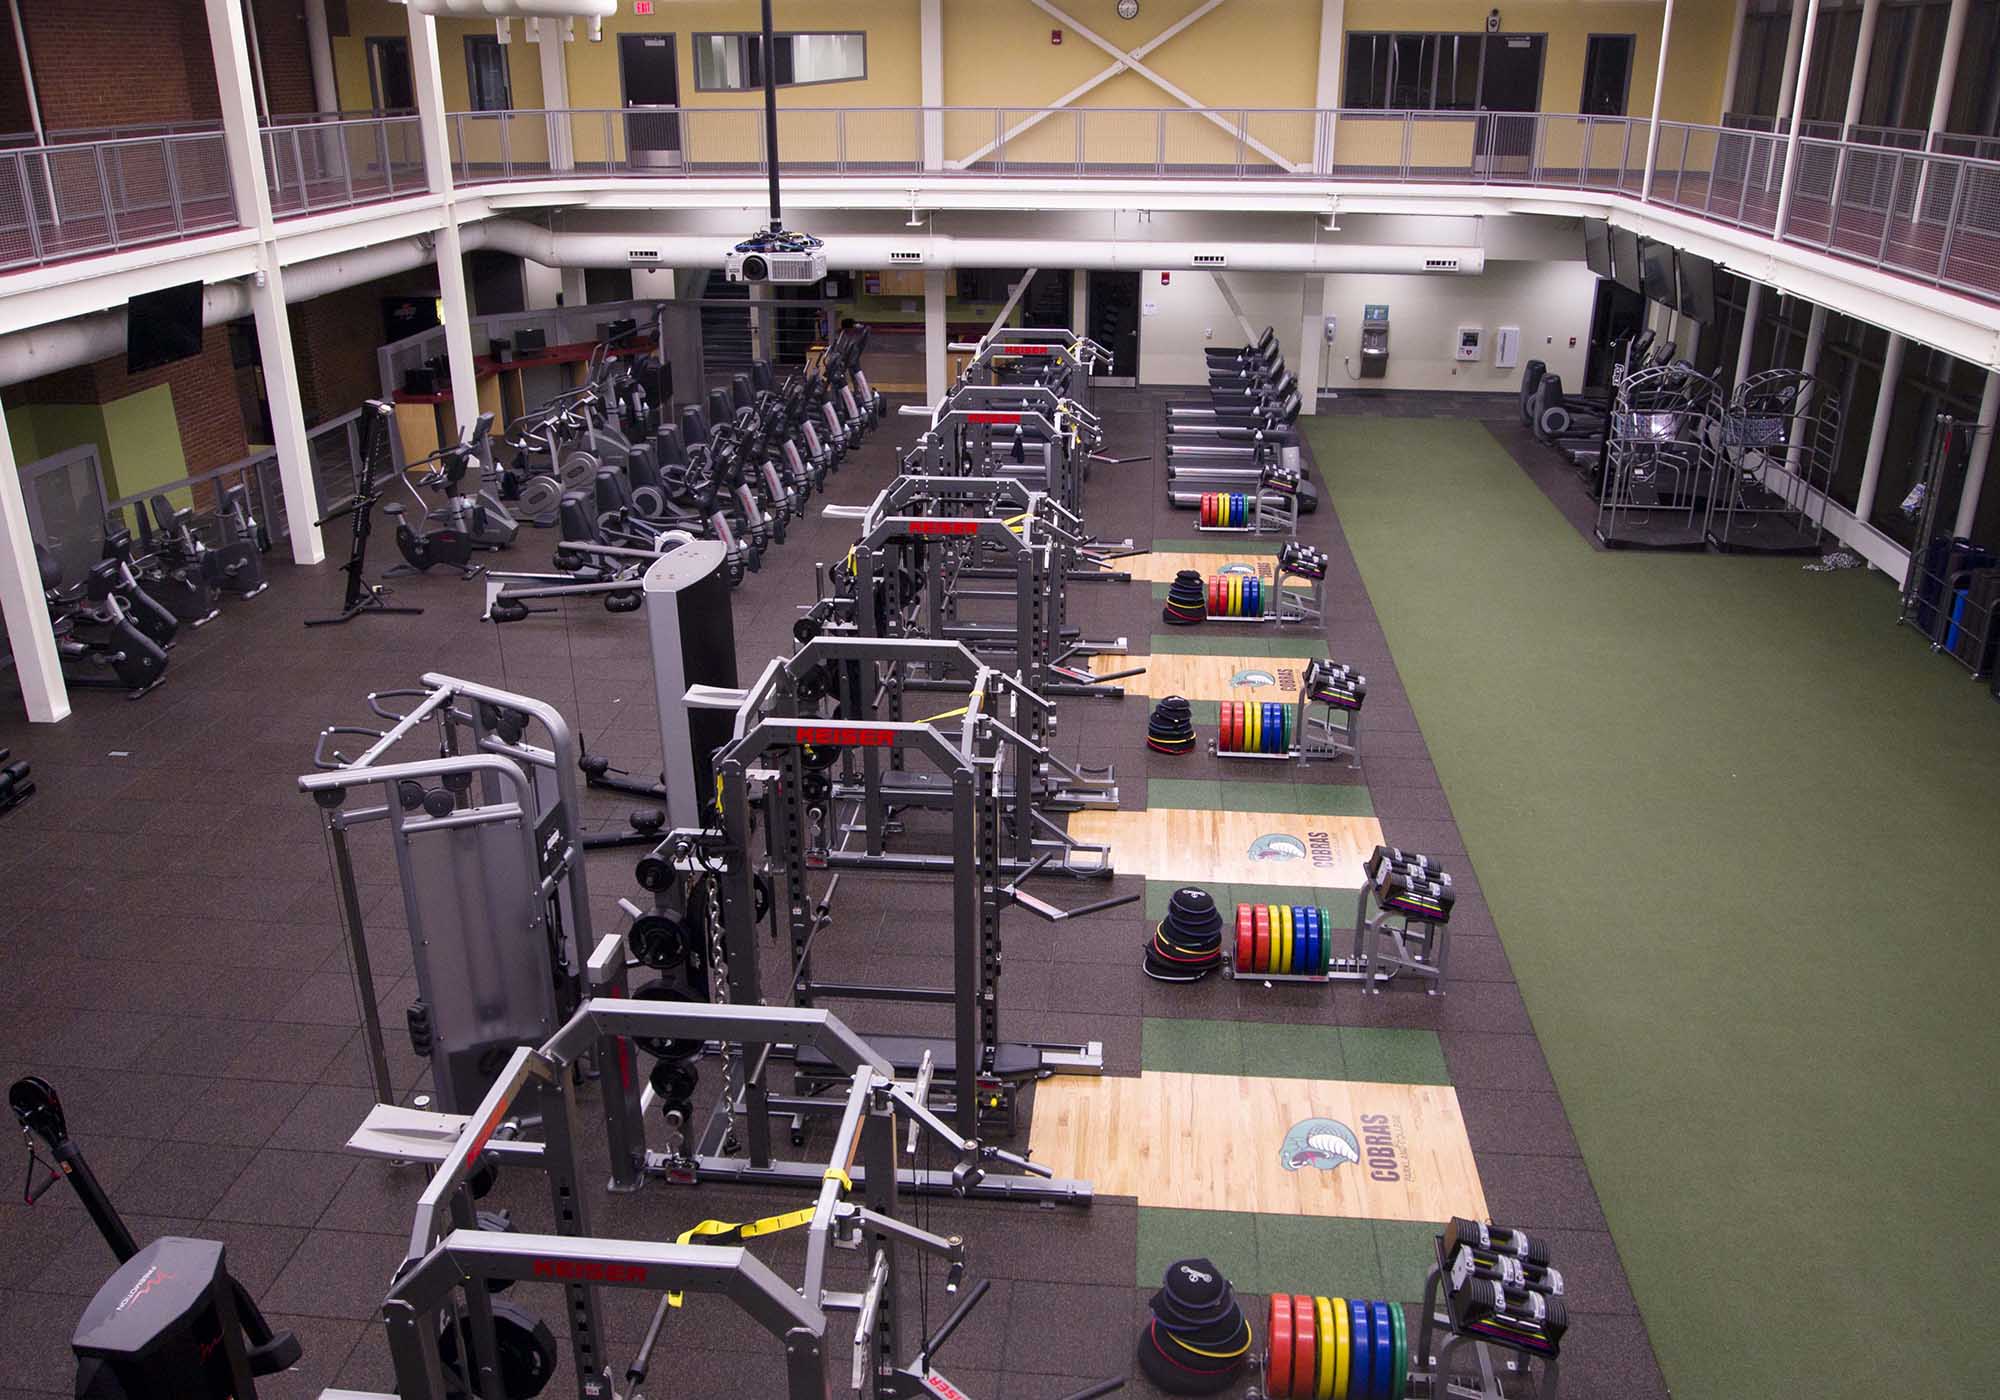 Fitness Center equiptment